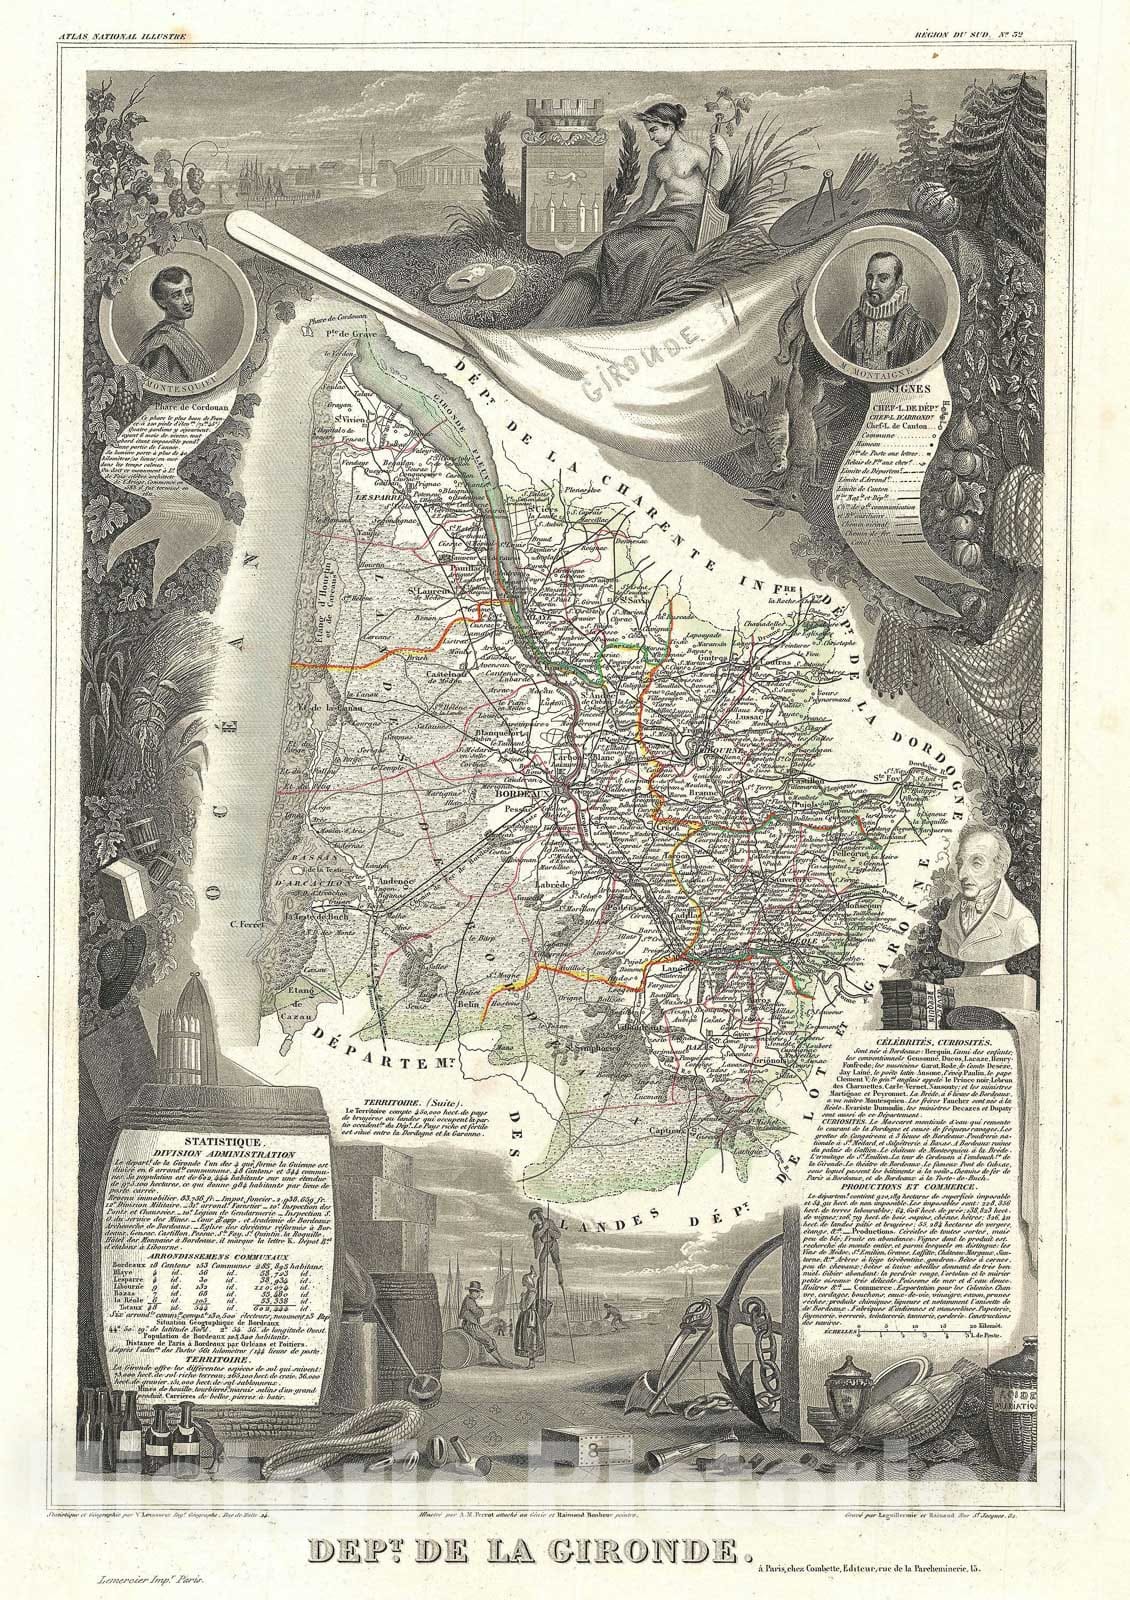 Historic Map : Gironde "Bordeaux Wine Region", Levasseur, 1852, Vintage Wall Art